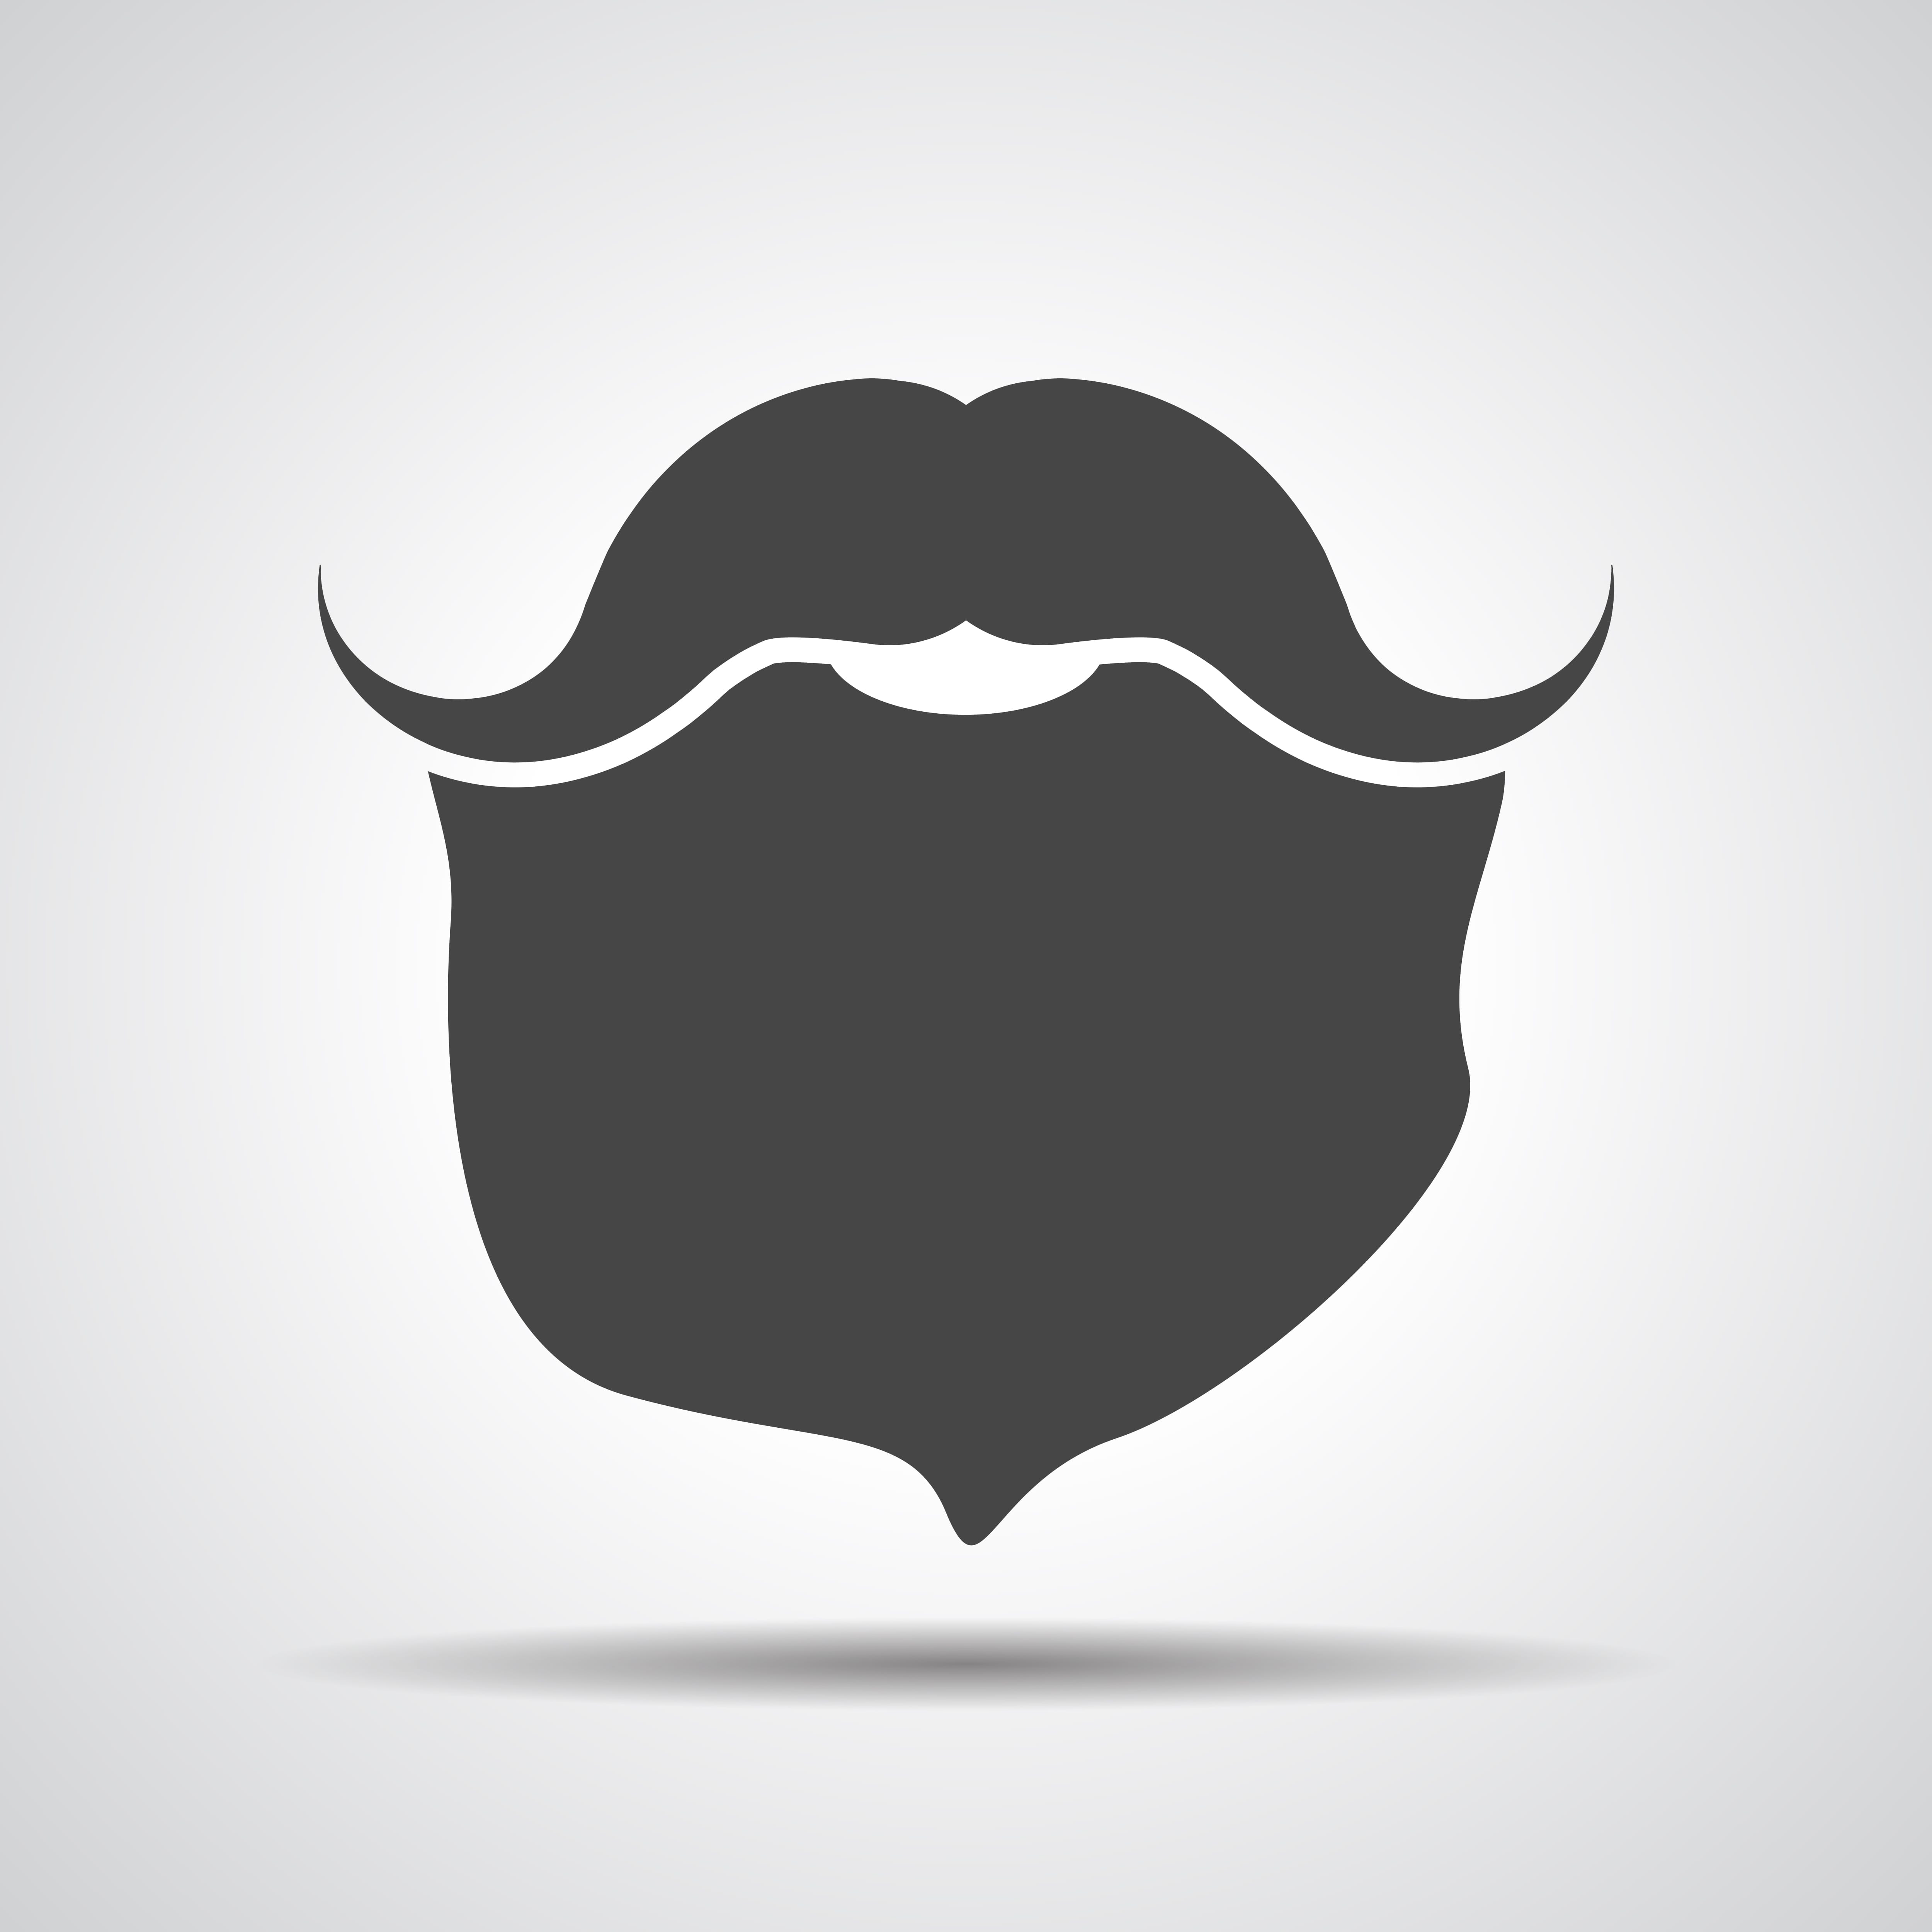 Mustache with beard - vector icon